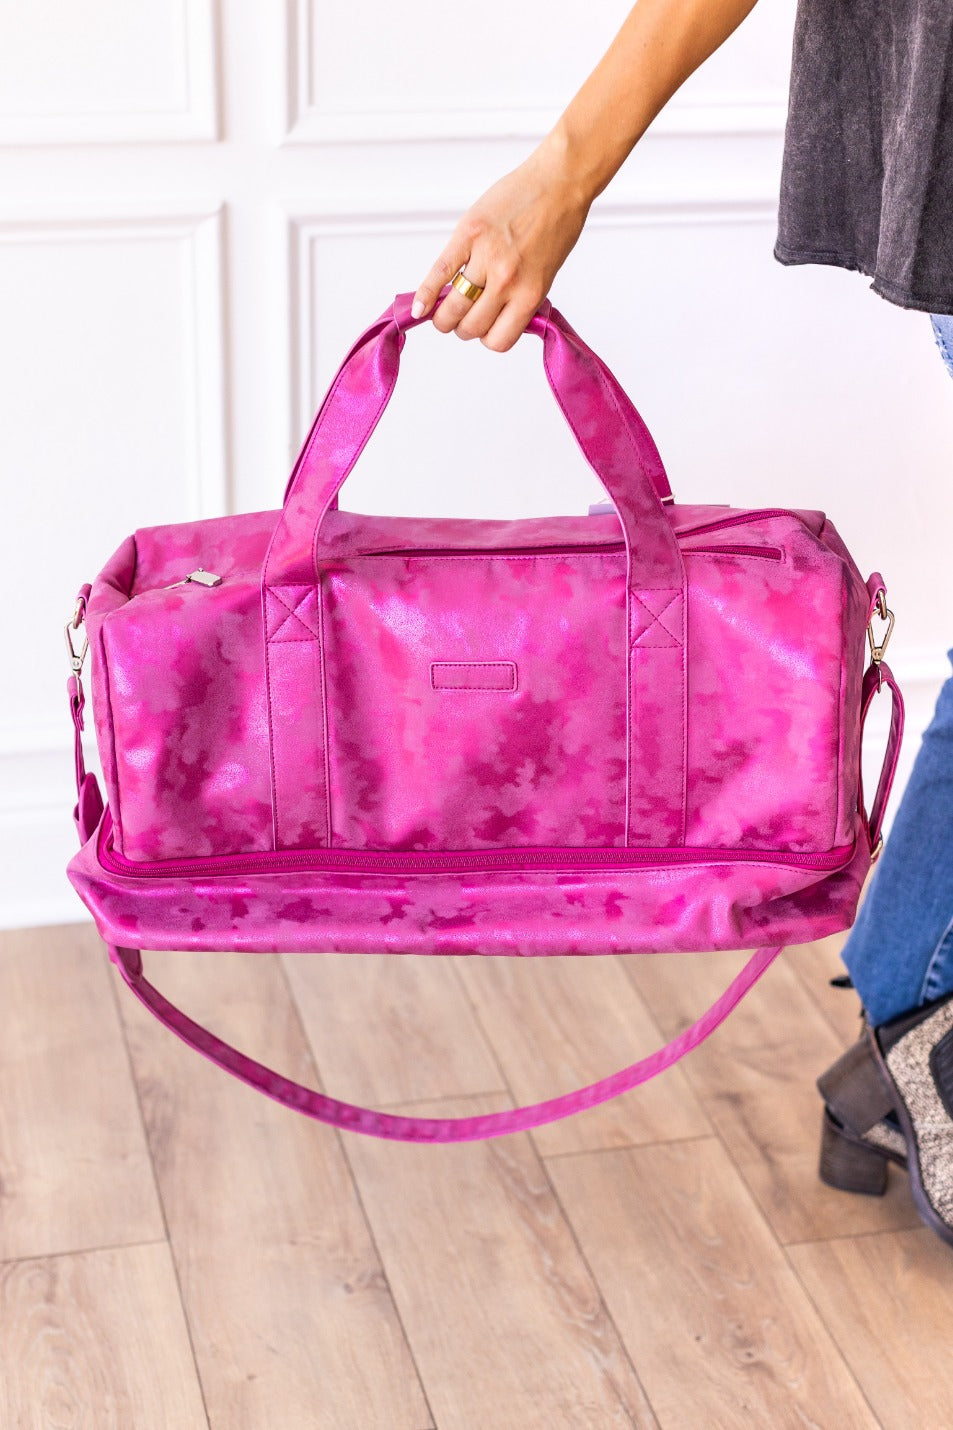 The Ashley Hot Pink Duffle Bag